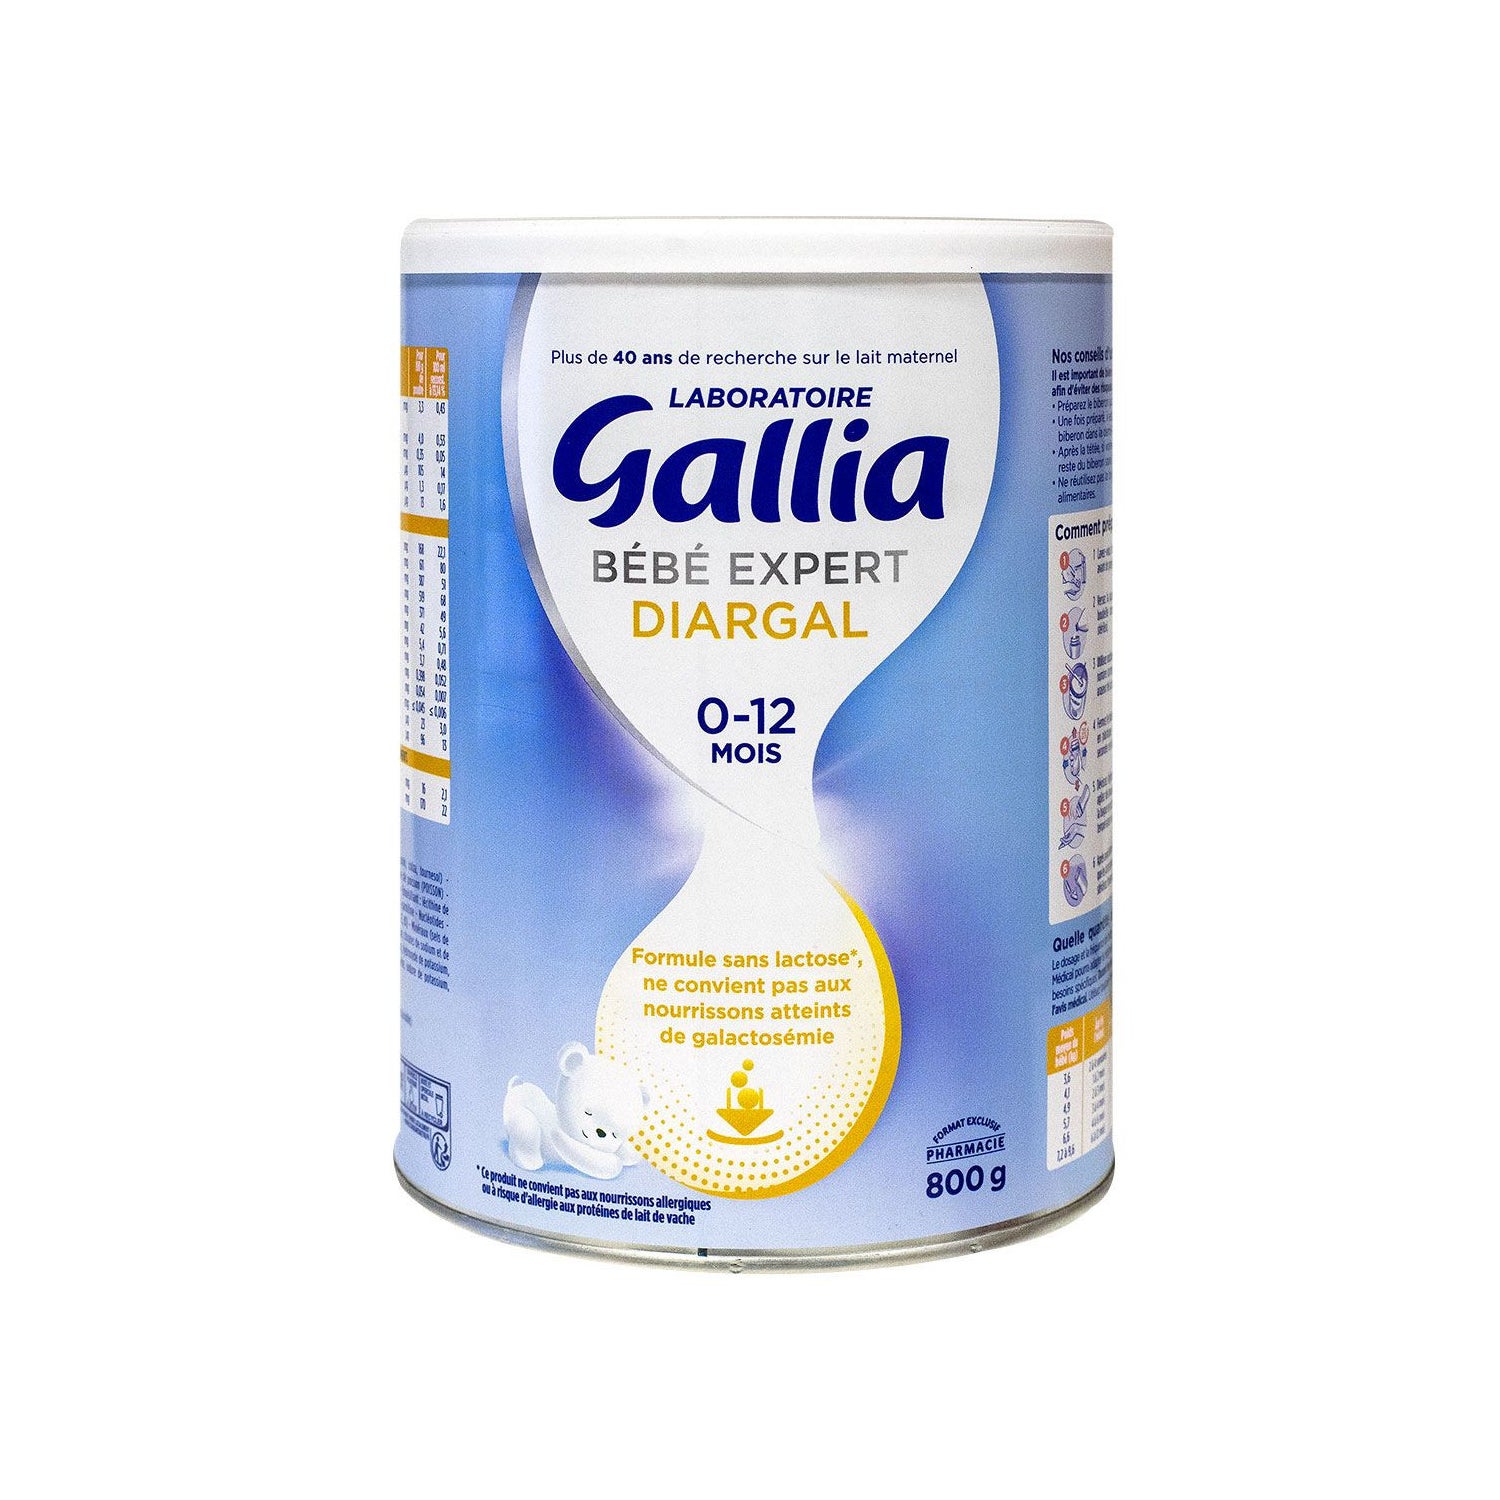 Lait AC Transit - 1er Age - 0-6 mois - Gallia - 800g - Gallia